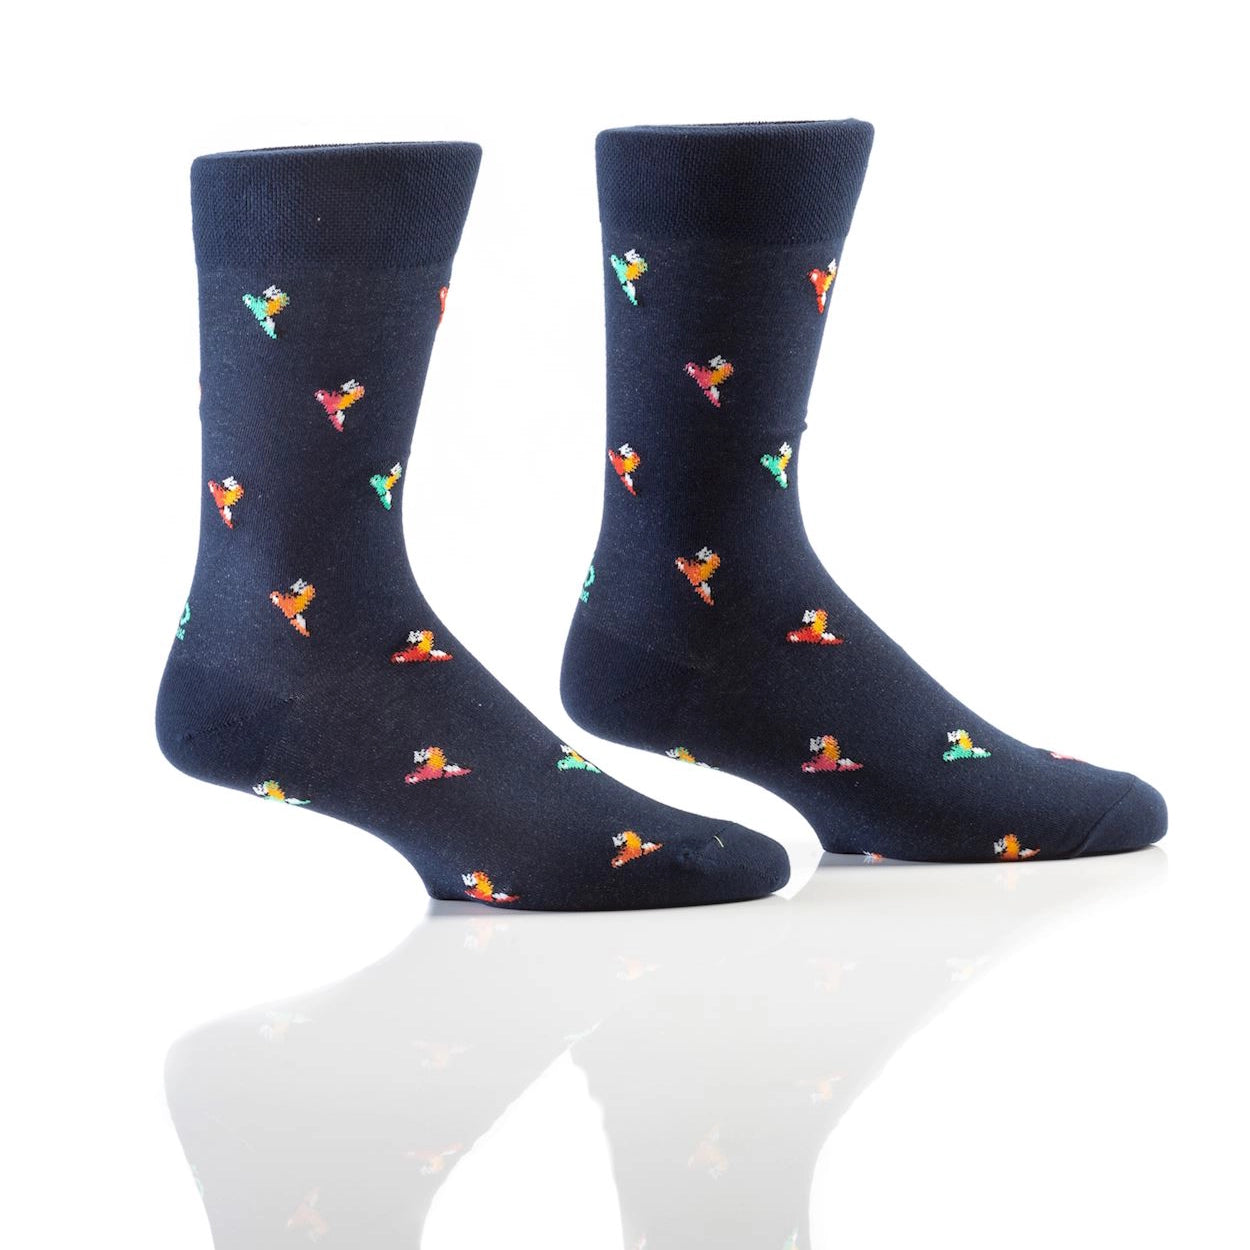 'Yo Sox Mini Parrots Crew Socks' in 'Navy' colour